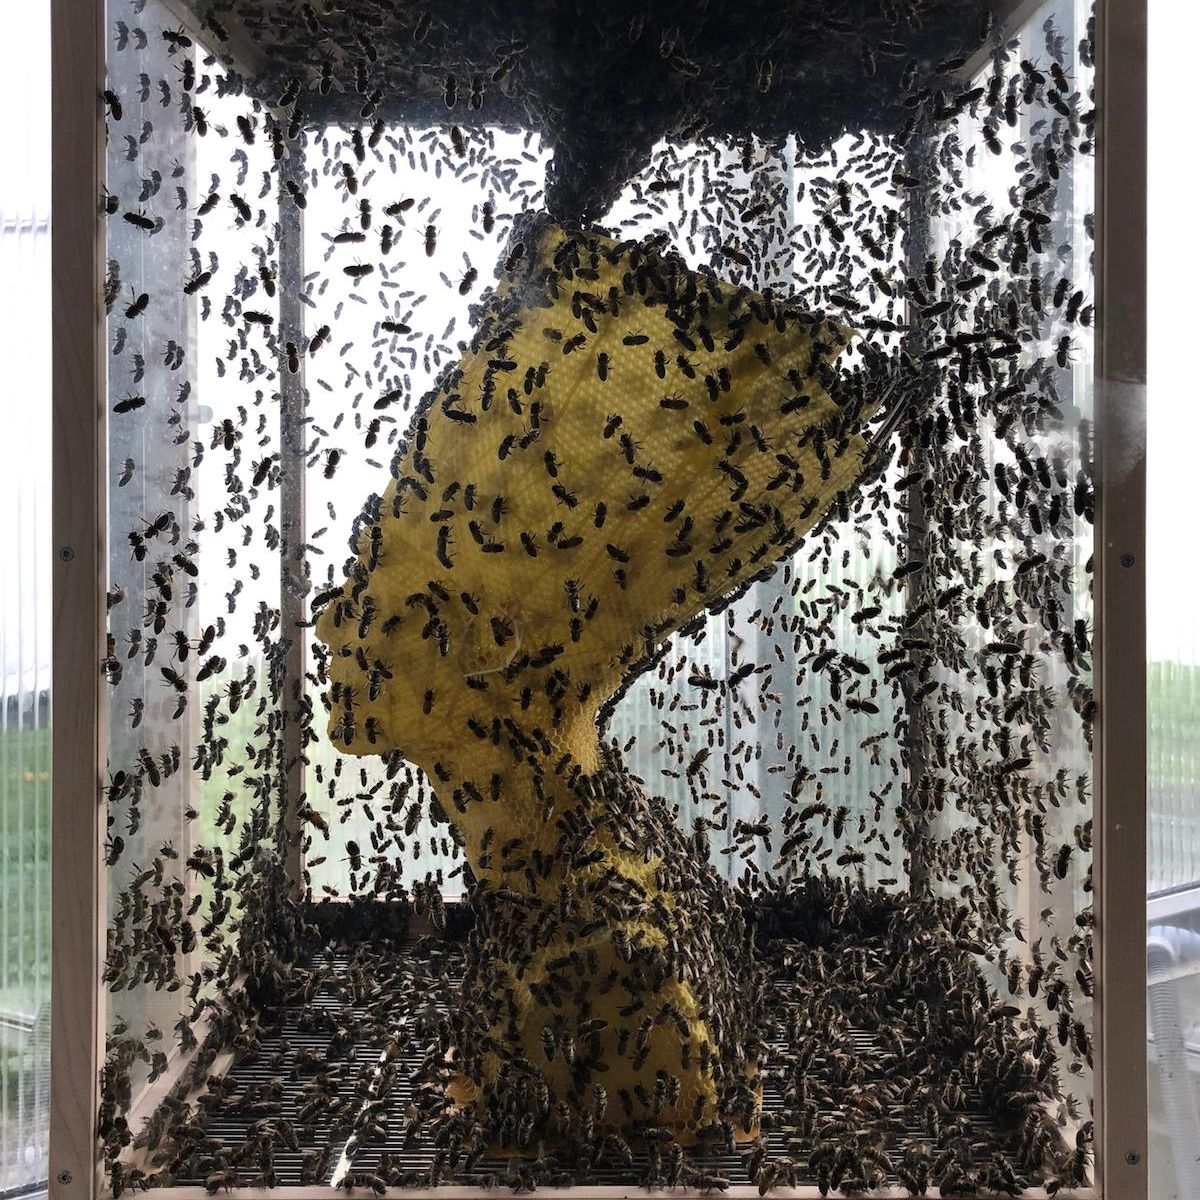 Artist Tomáš Libertíny reveals the process behind creating beeswax classic sculptures on Thursd on Thursd